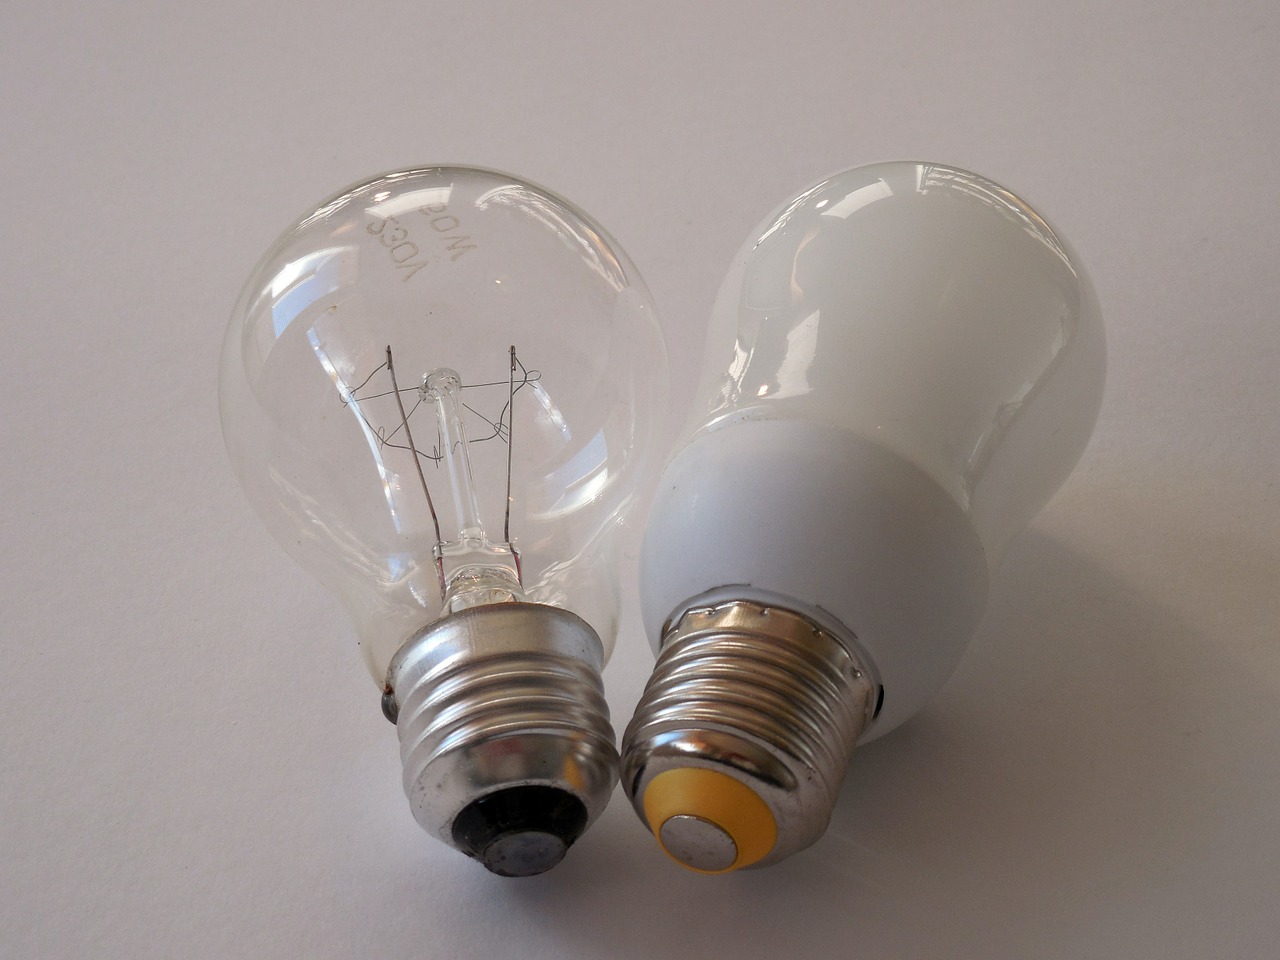 Glühlampe vs. Halogenlampe vs Energiesparlampe